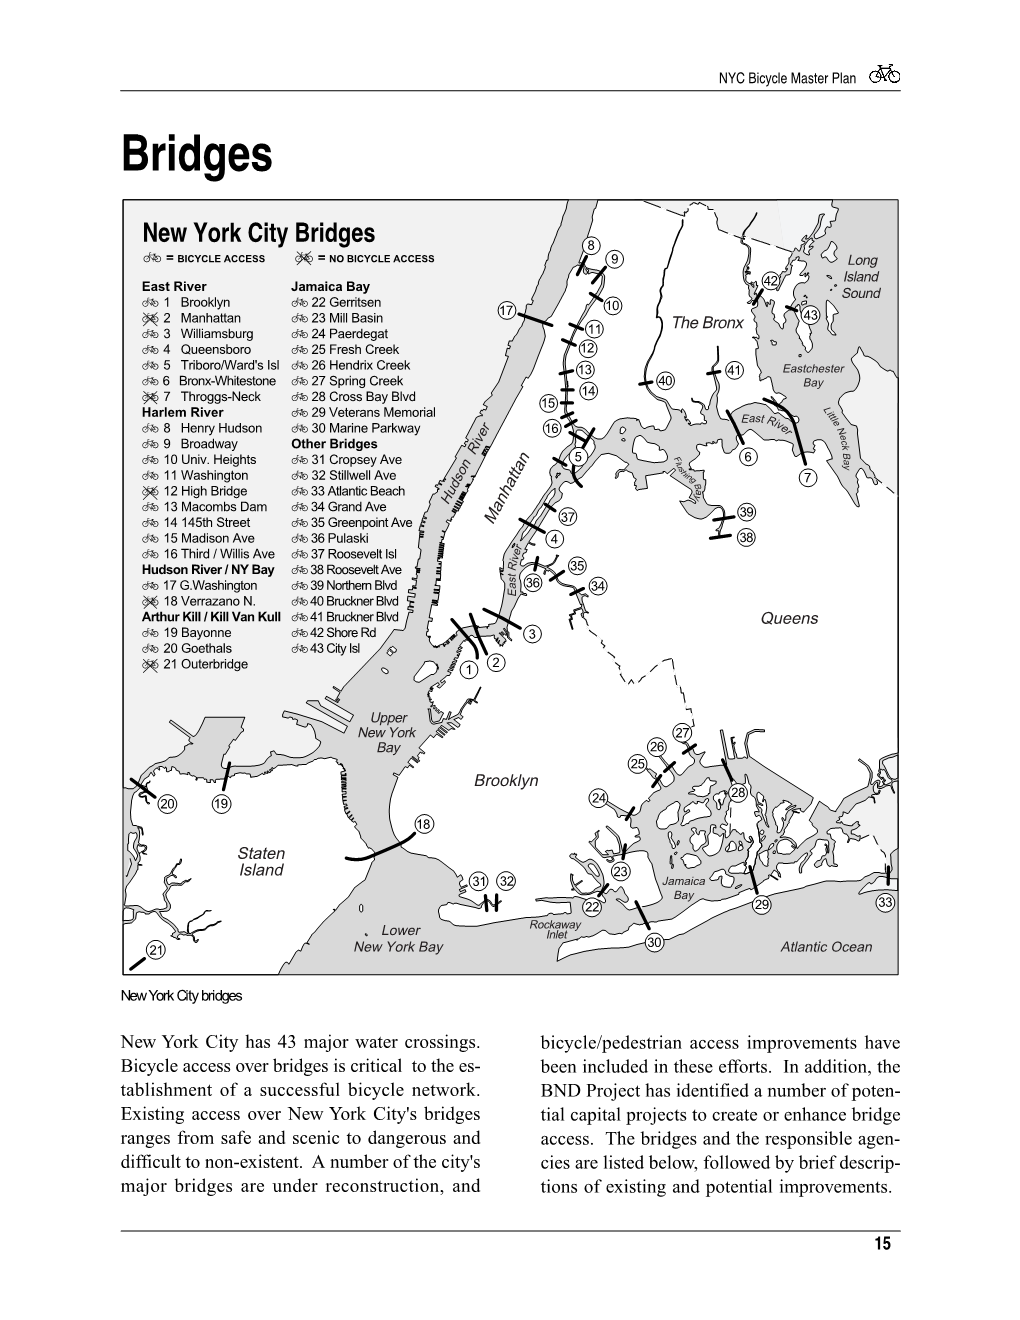 Bridges and Bikes, New York City